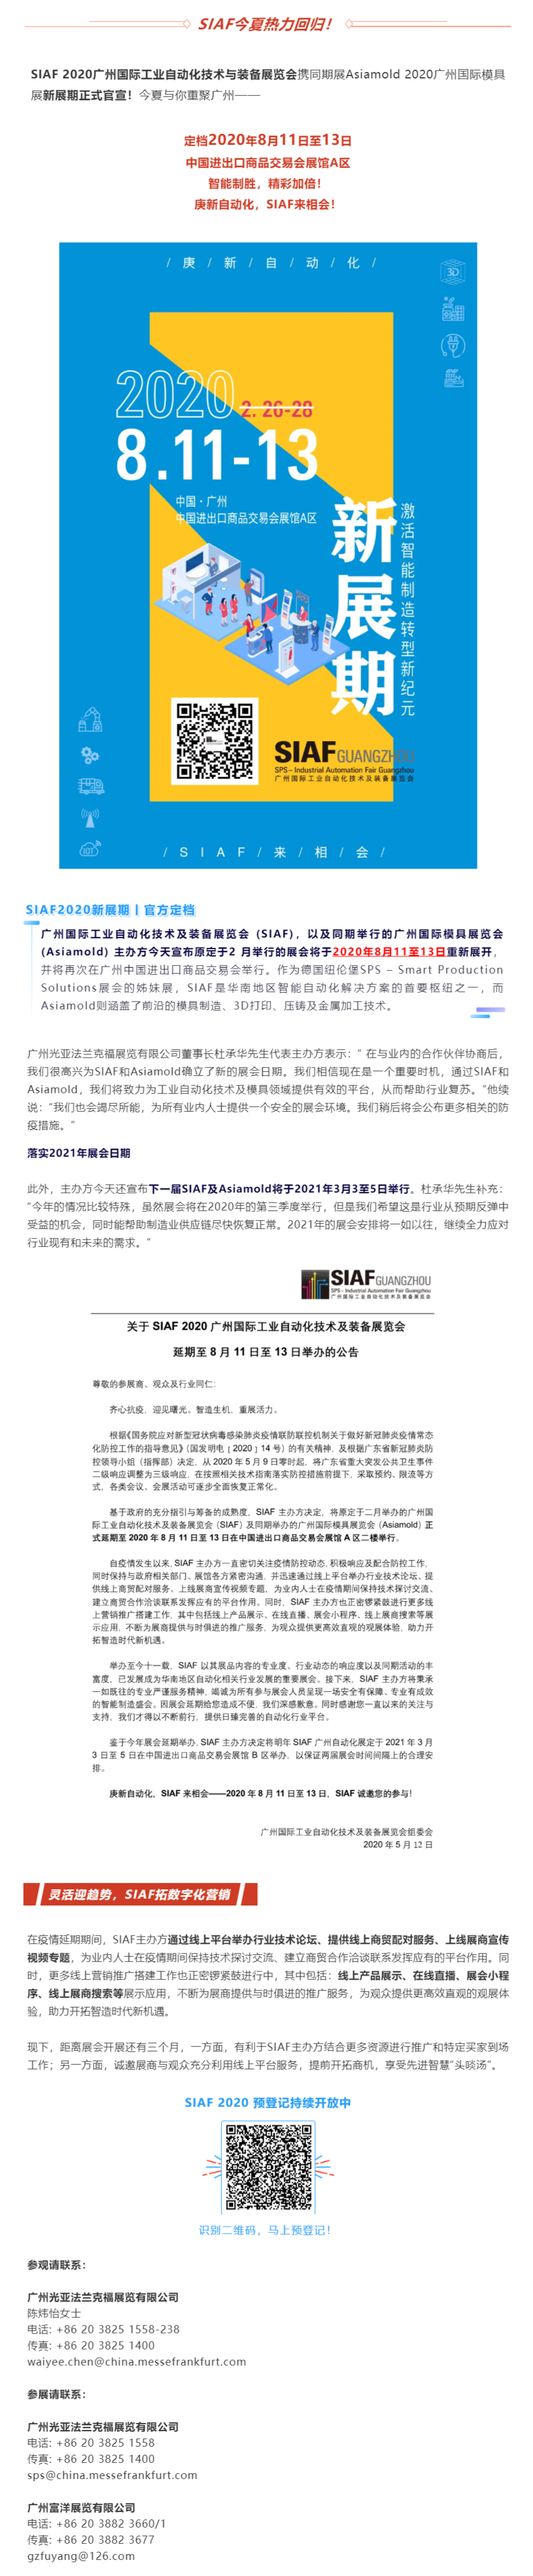 FireShot Capture 023 - SIAF 2020新展期正式官宣! 定档8月11日-13日 - mp-weixin-qq-com